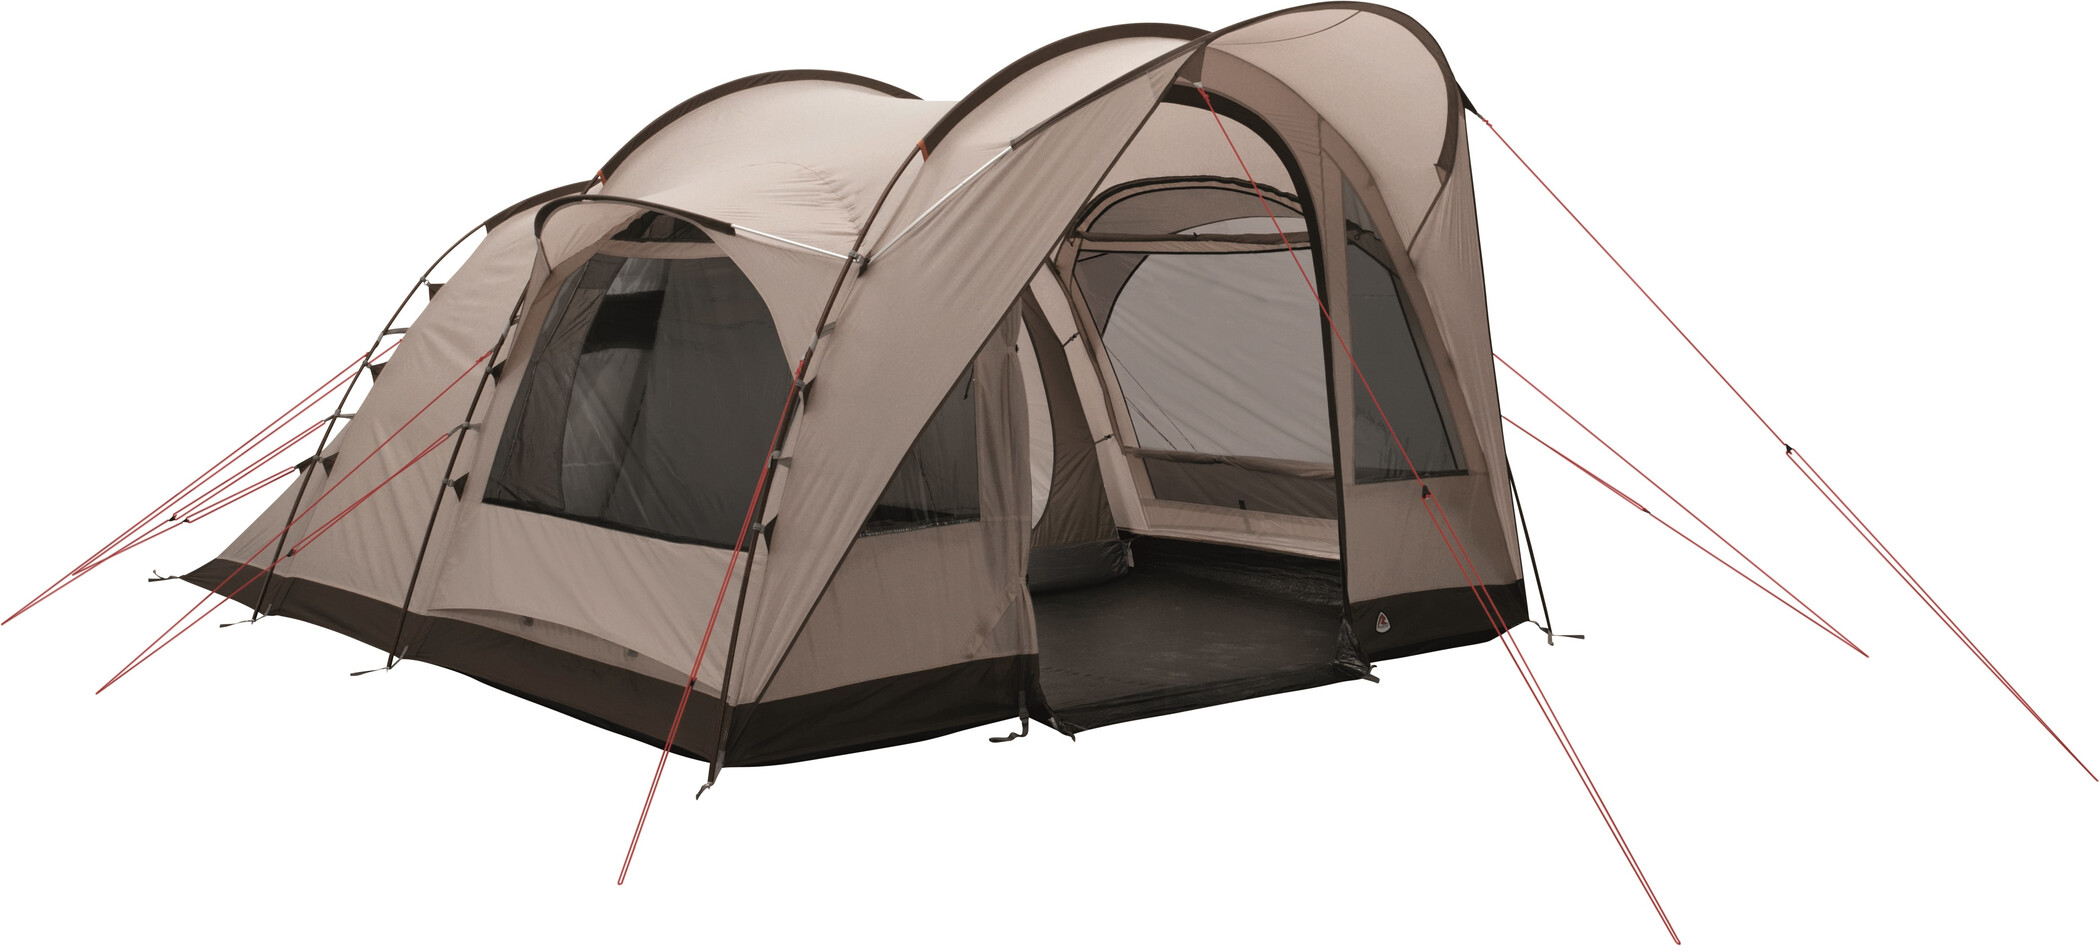 Smart camping. Палатка Robens Cabin 500. Палатка Robens Cabin 300. Палатка адвентуре 4 местная. REALCRAFT 600 Cabin Журалайф.